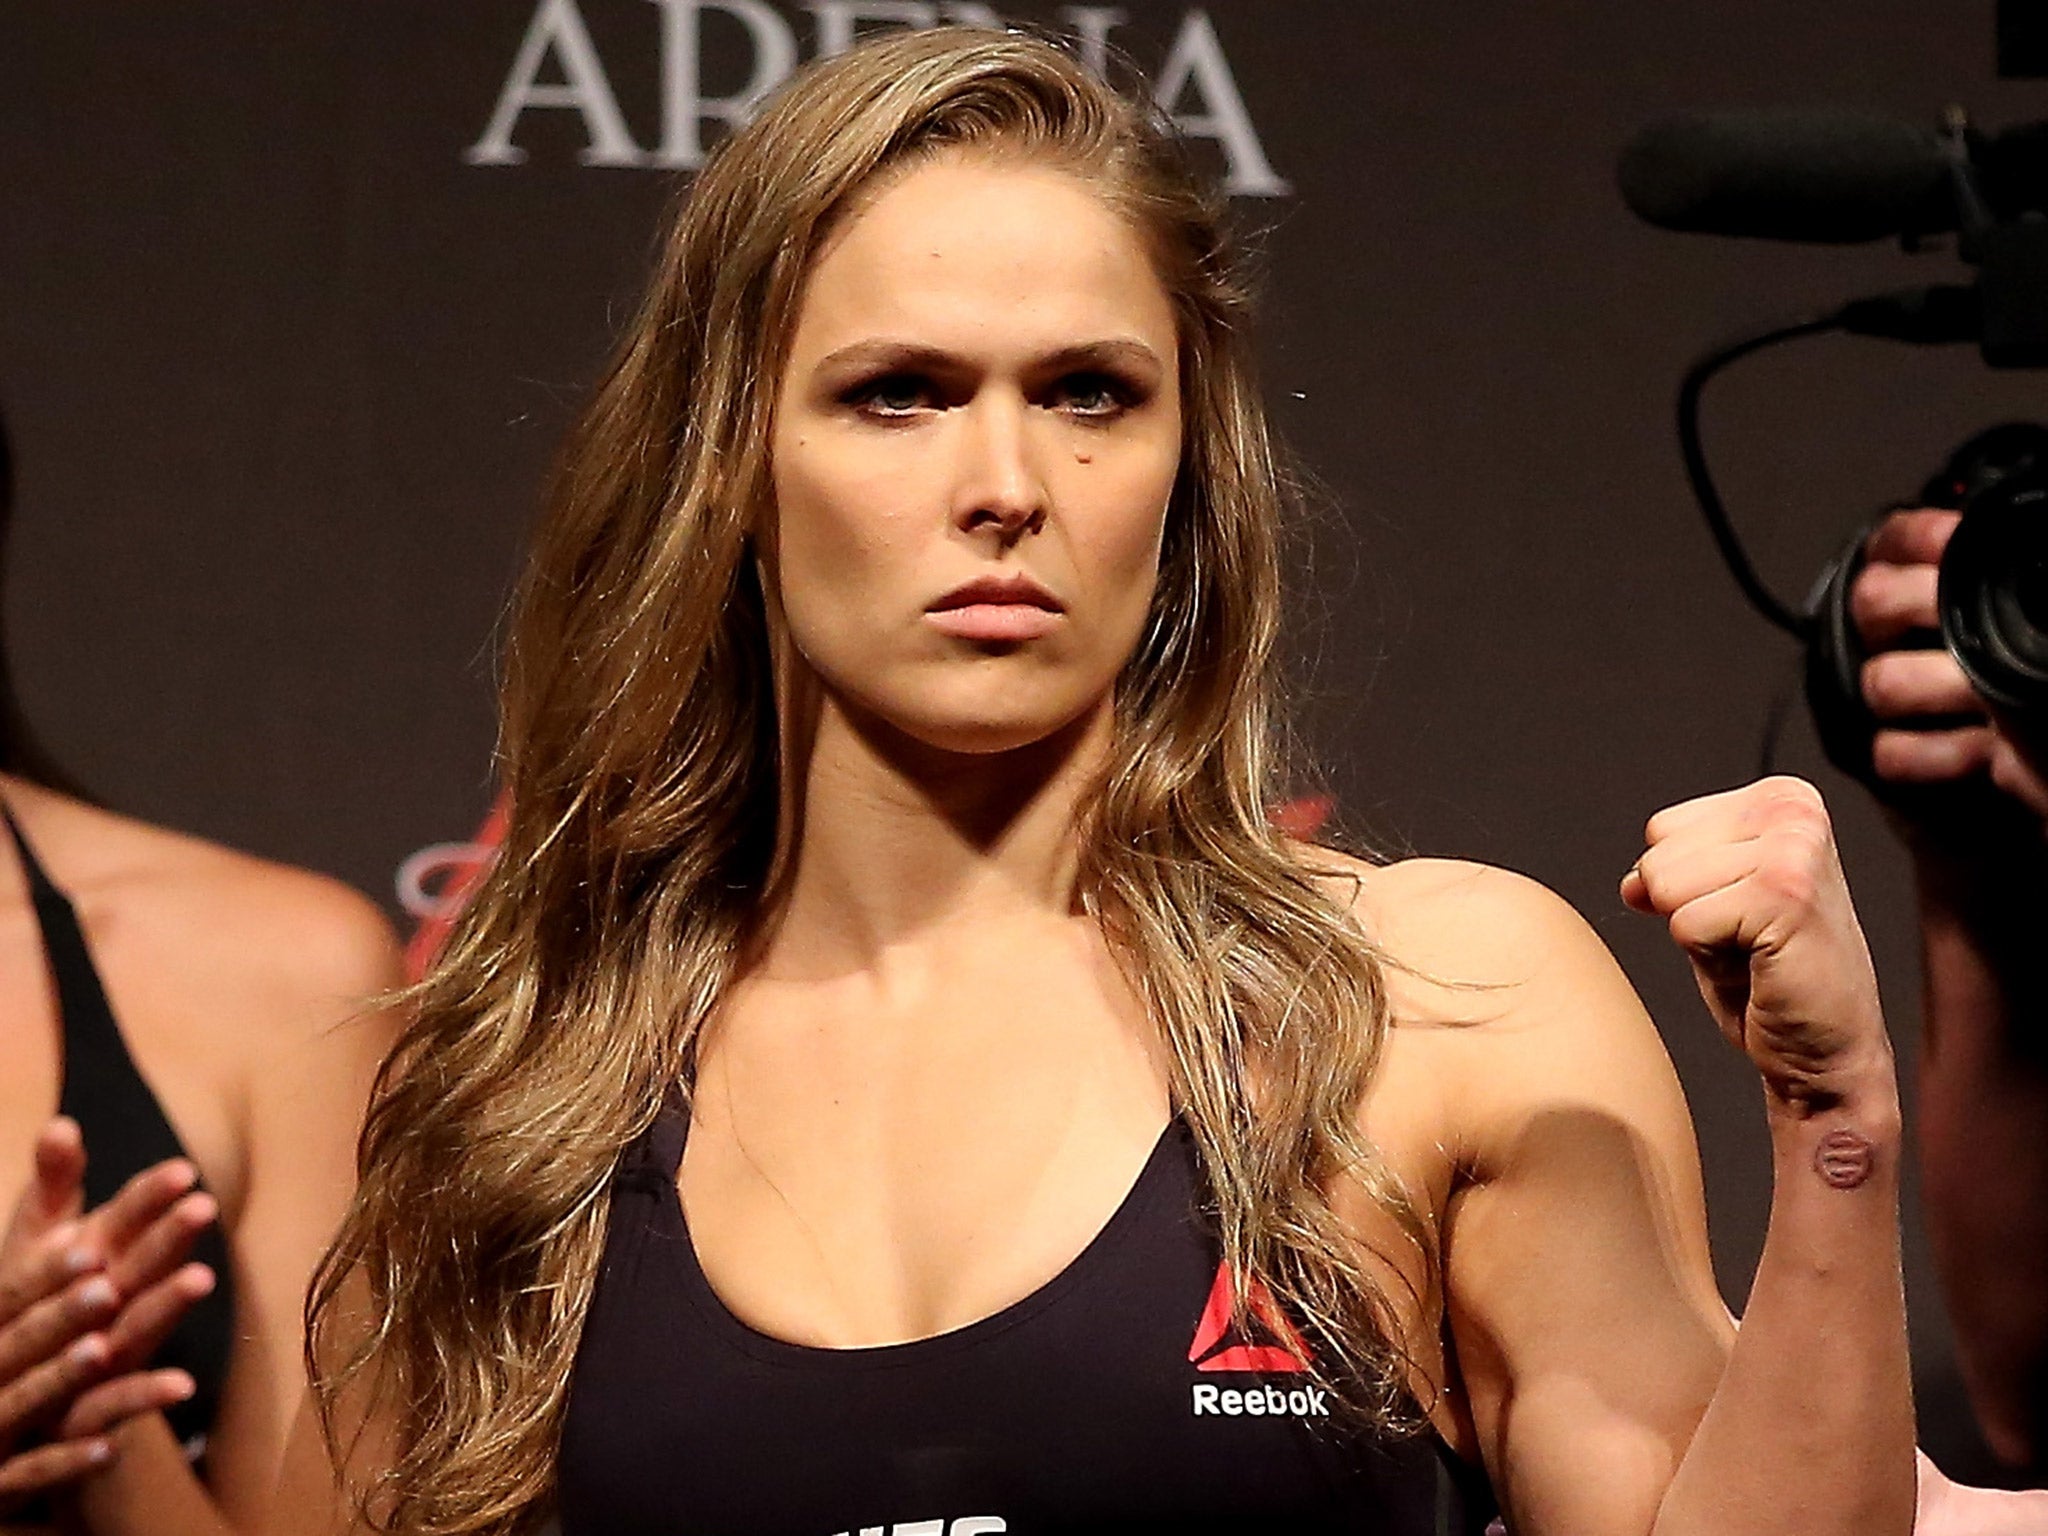 Ronda Rousey to make return at UFC 207 to face Amanda Nunes in bantamweight title match